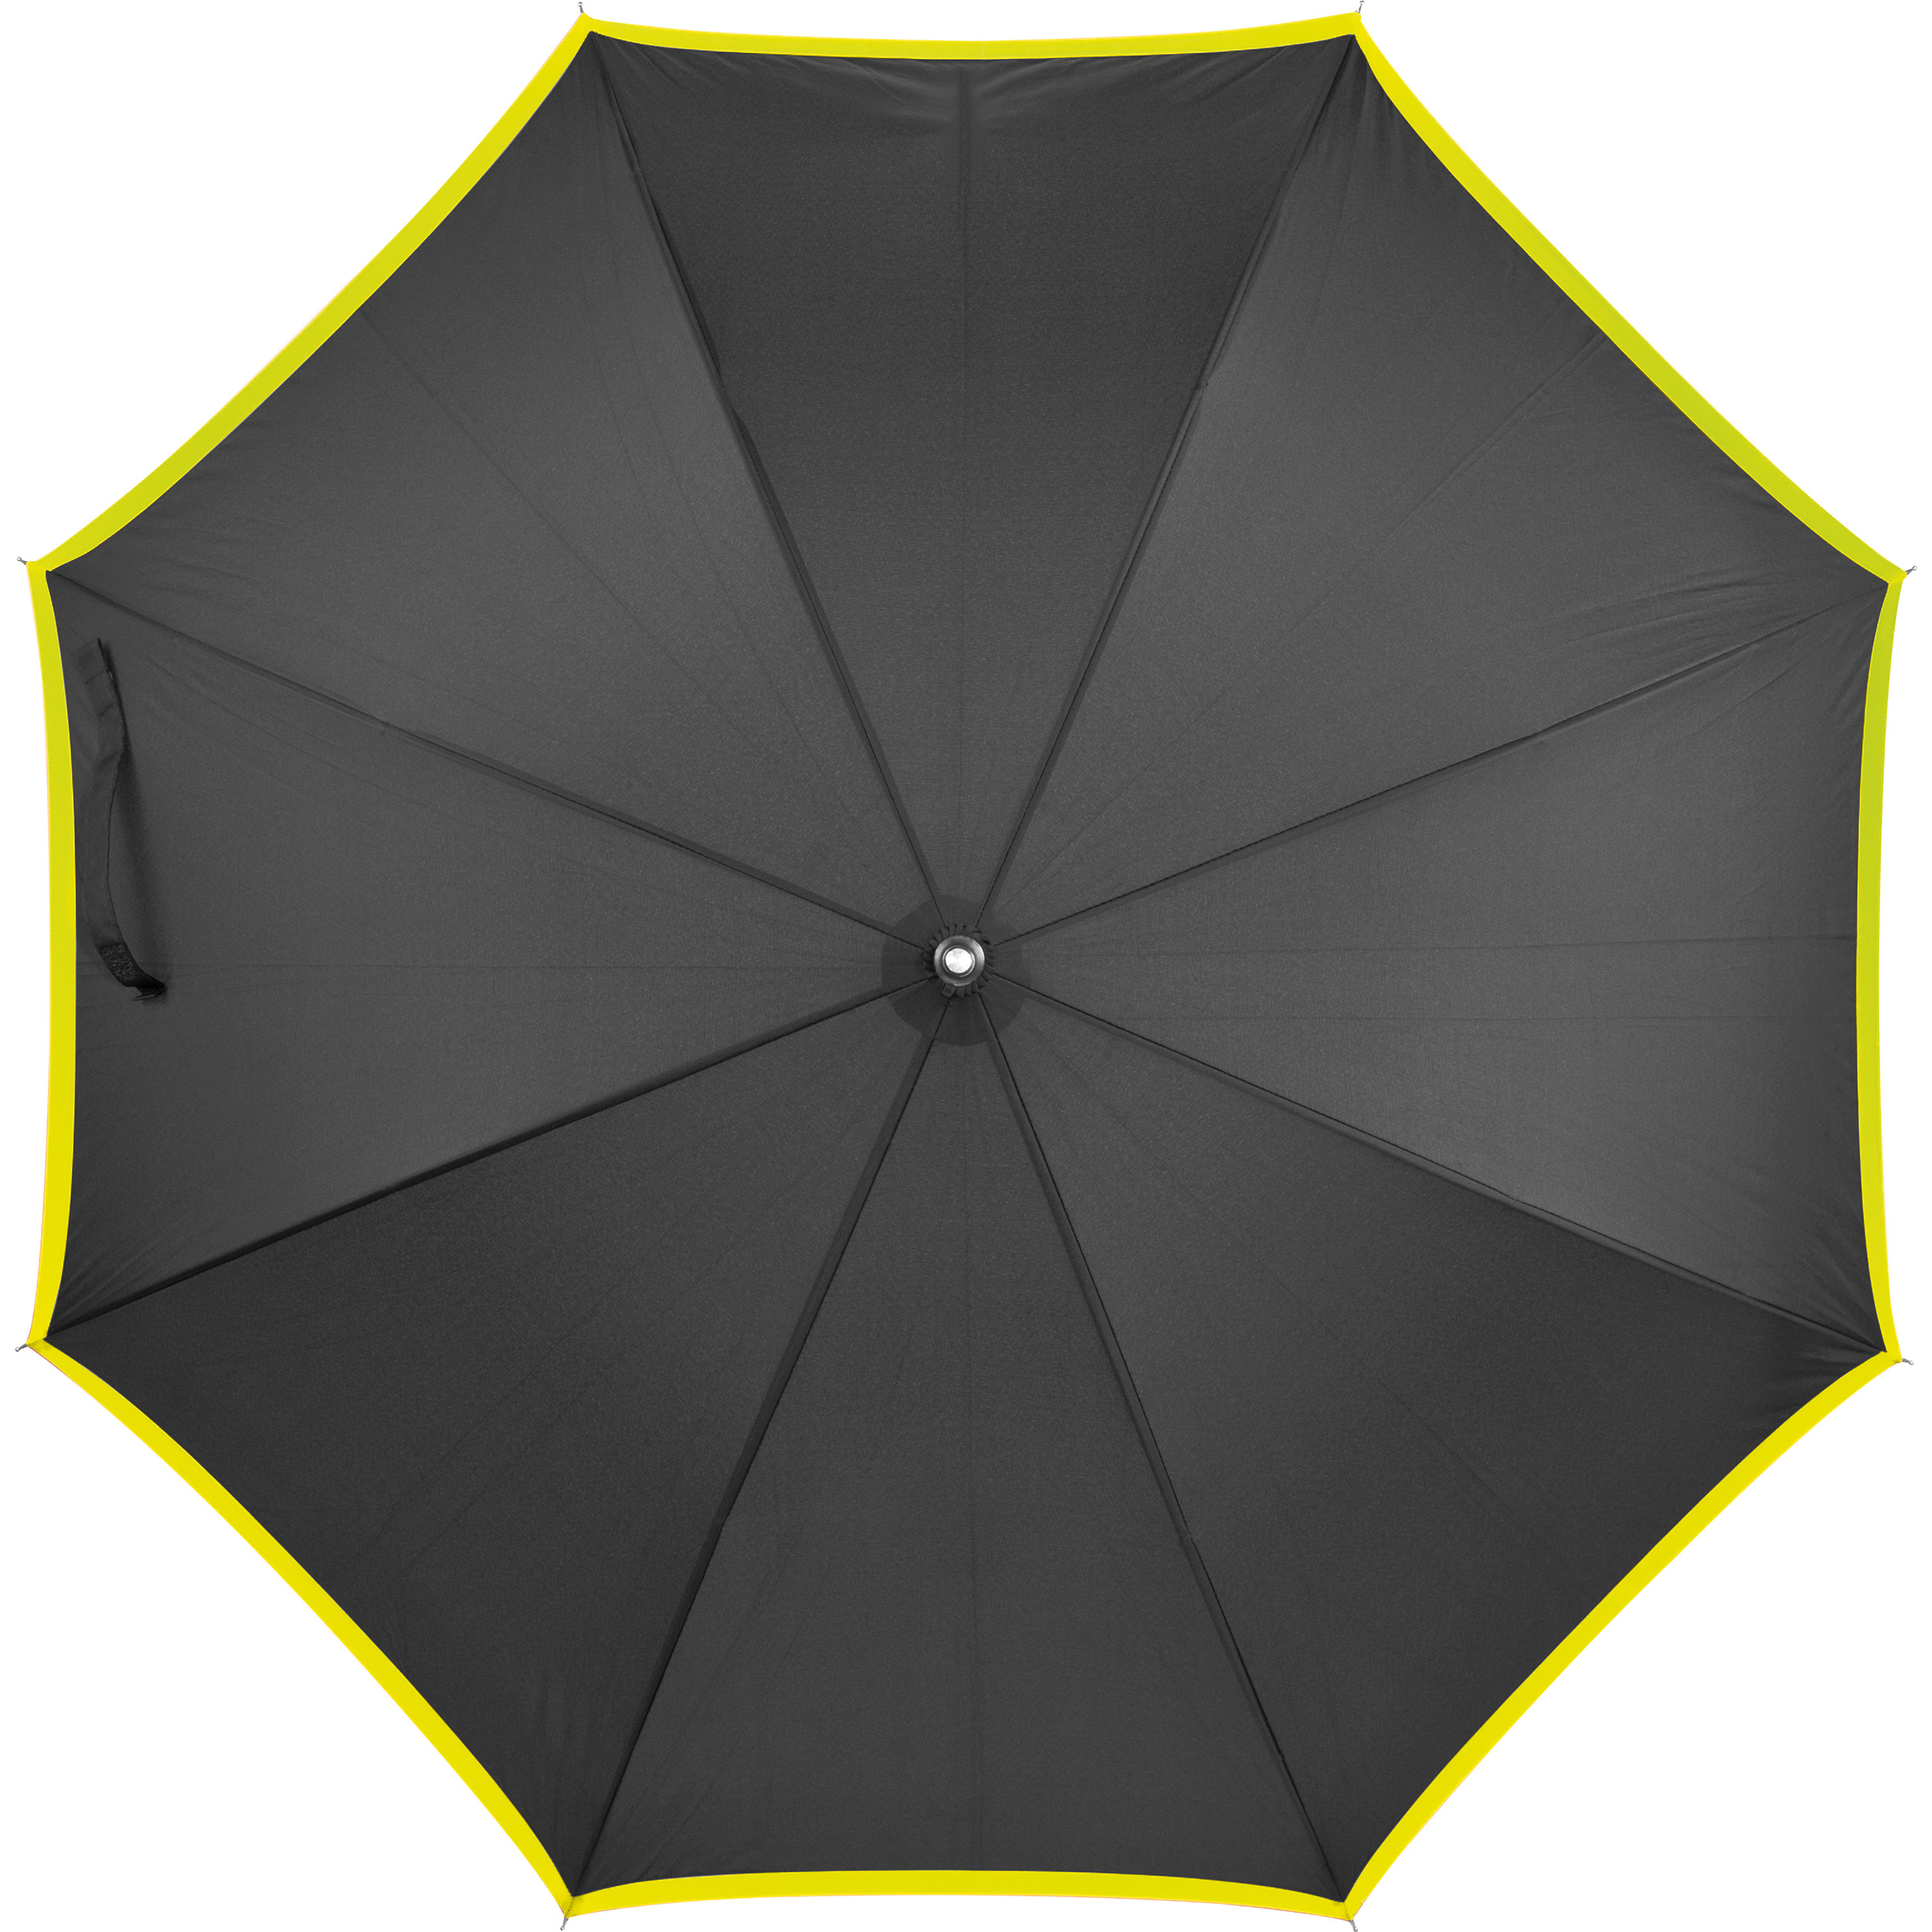 Umbrella made of pongee, automatic